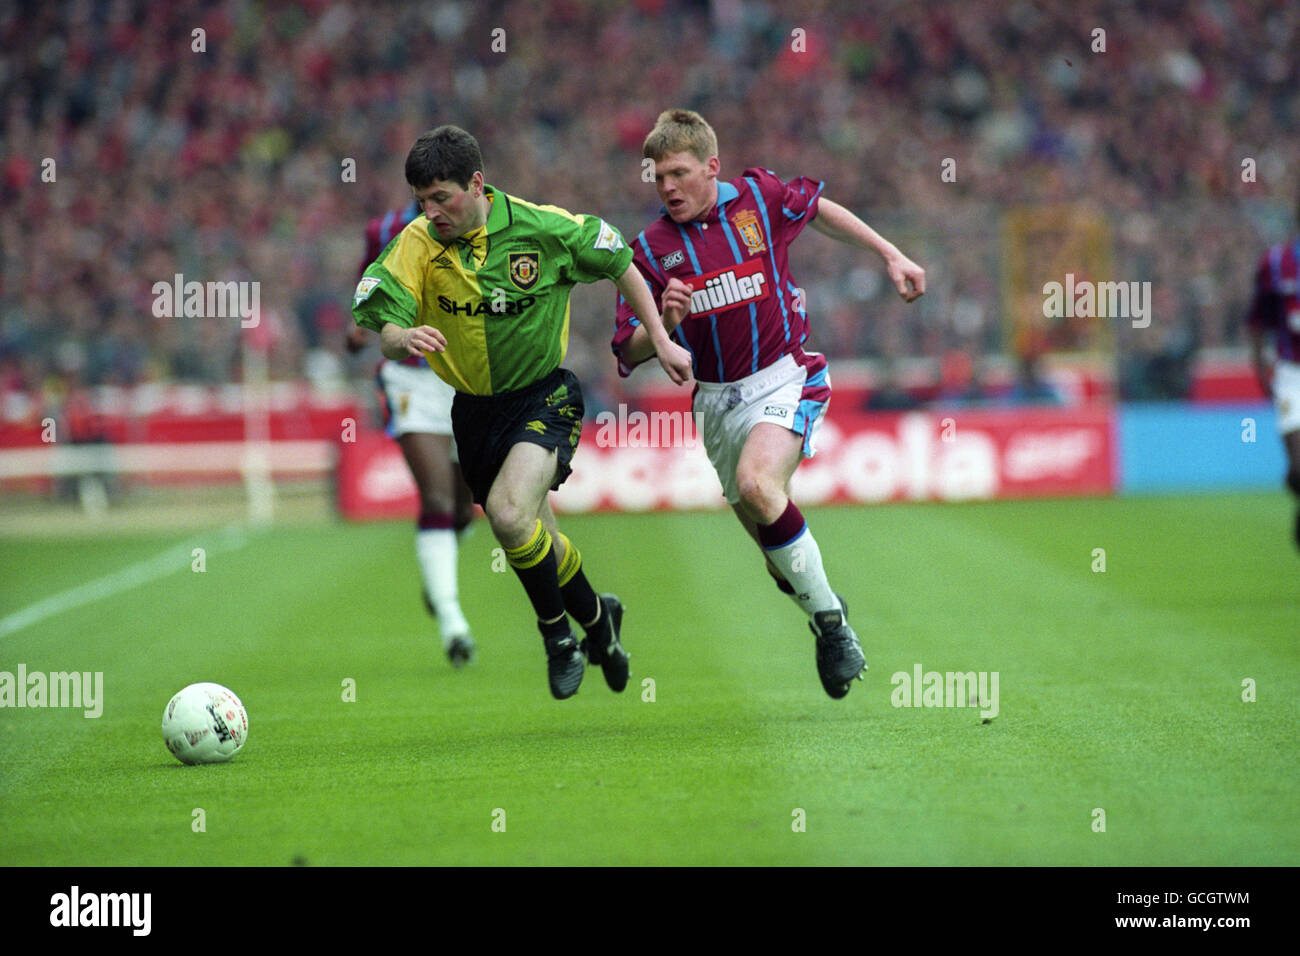 (l-r) Denis Irwin, Manchester United, and Graham Fenton, Aston Villa. Stock Photo